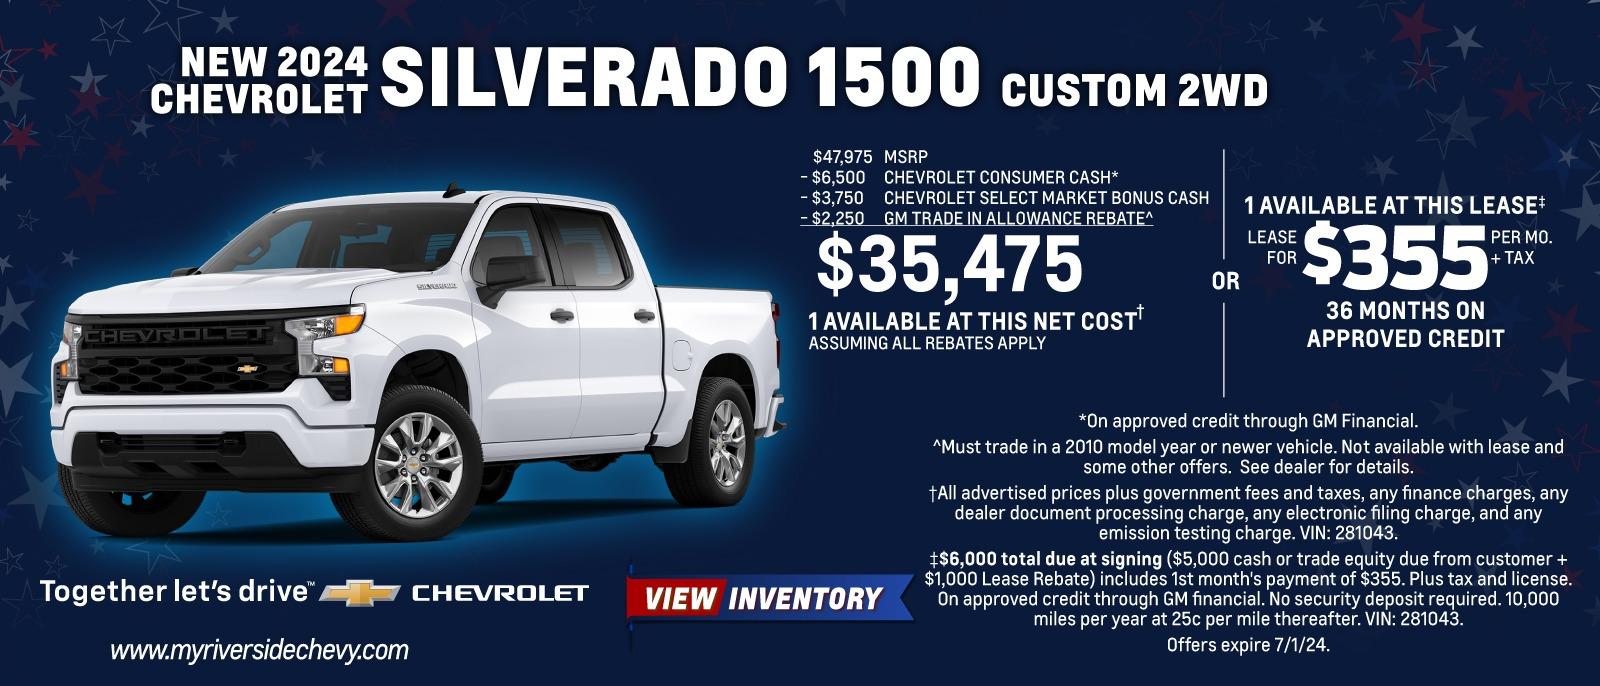 New 2024 Chevy Silverado 1500 Custom 2WD - $47,975 MSRP -$6,500 CHEVROLET CONSUMER CASH* - $3,750 CHEVROLET SELECT MARKET BONUS CASH -$2,250 GM TRADE IN ALLOWANCE REBATE^ $35,475